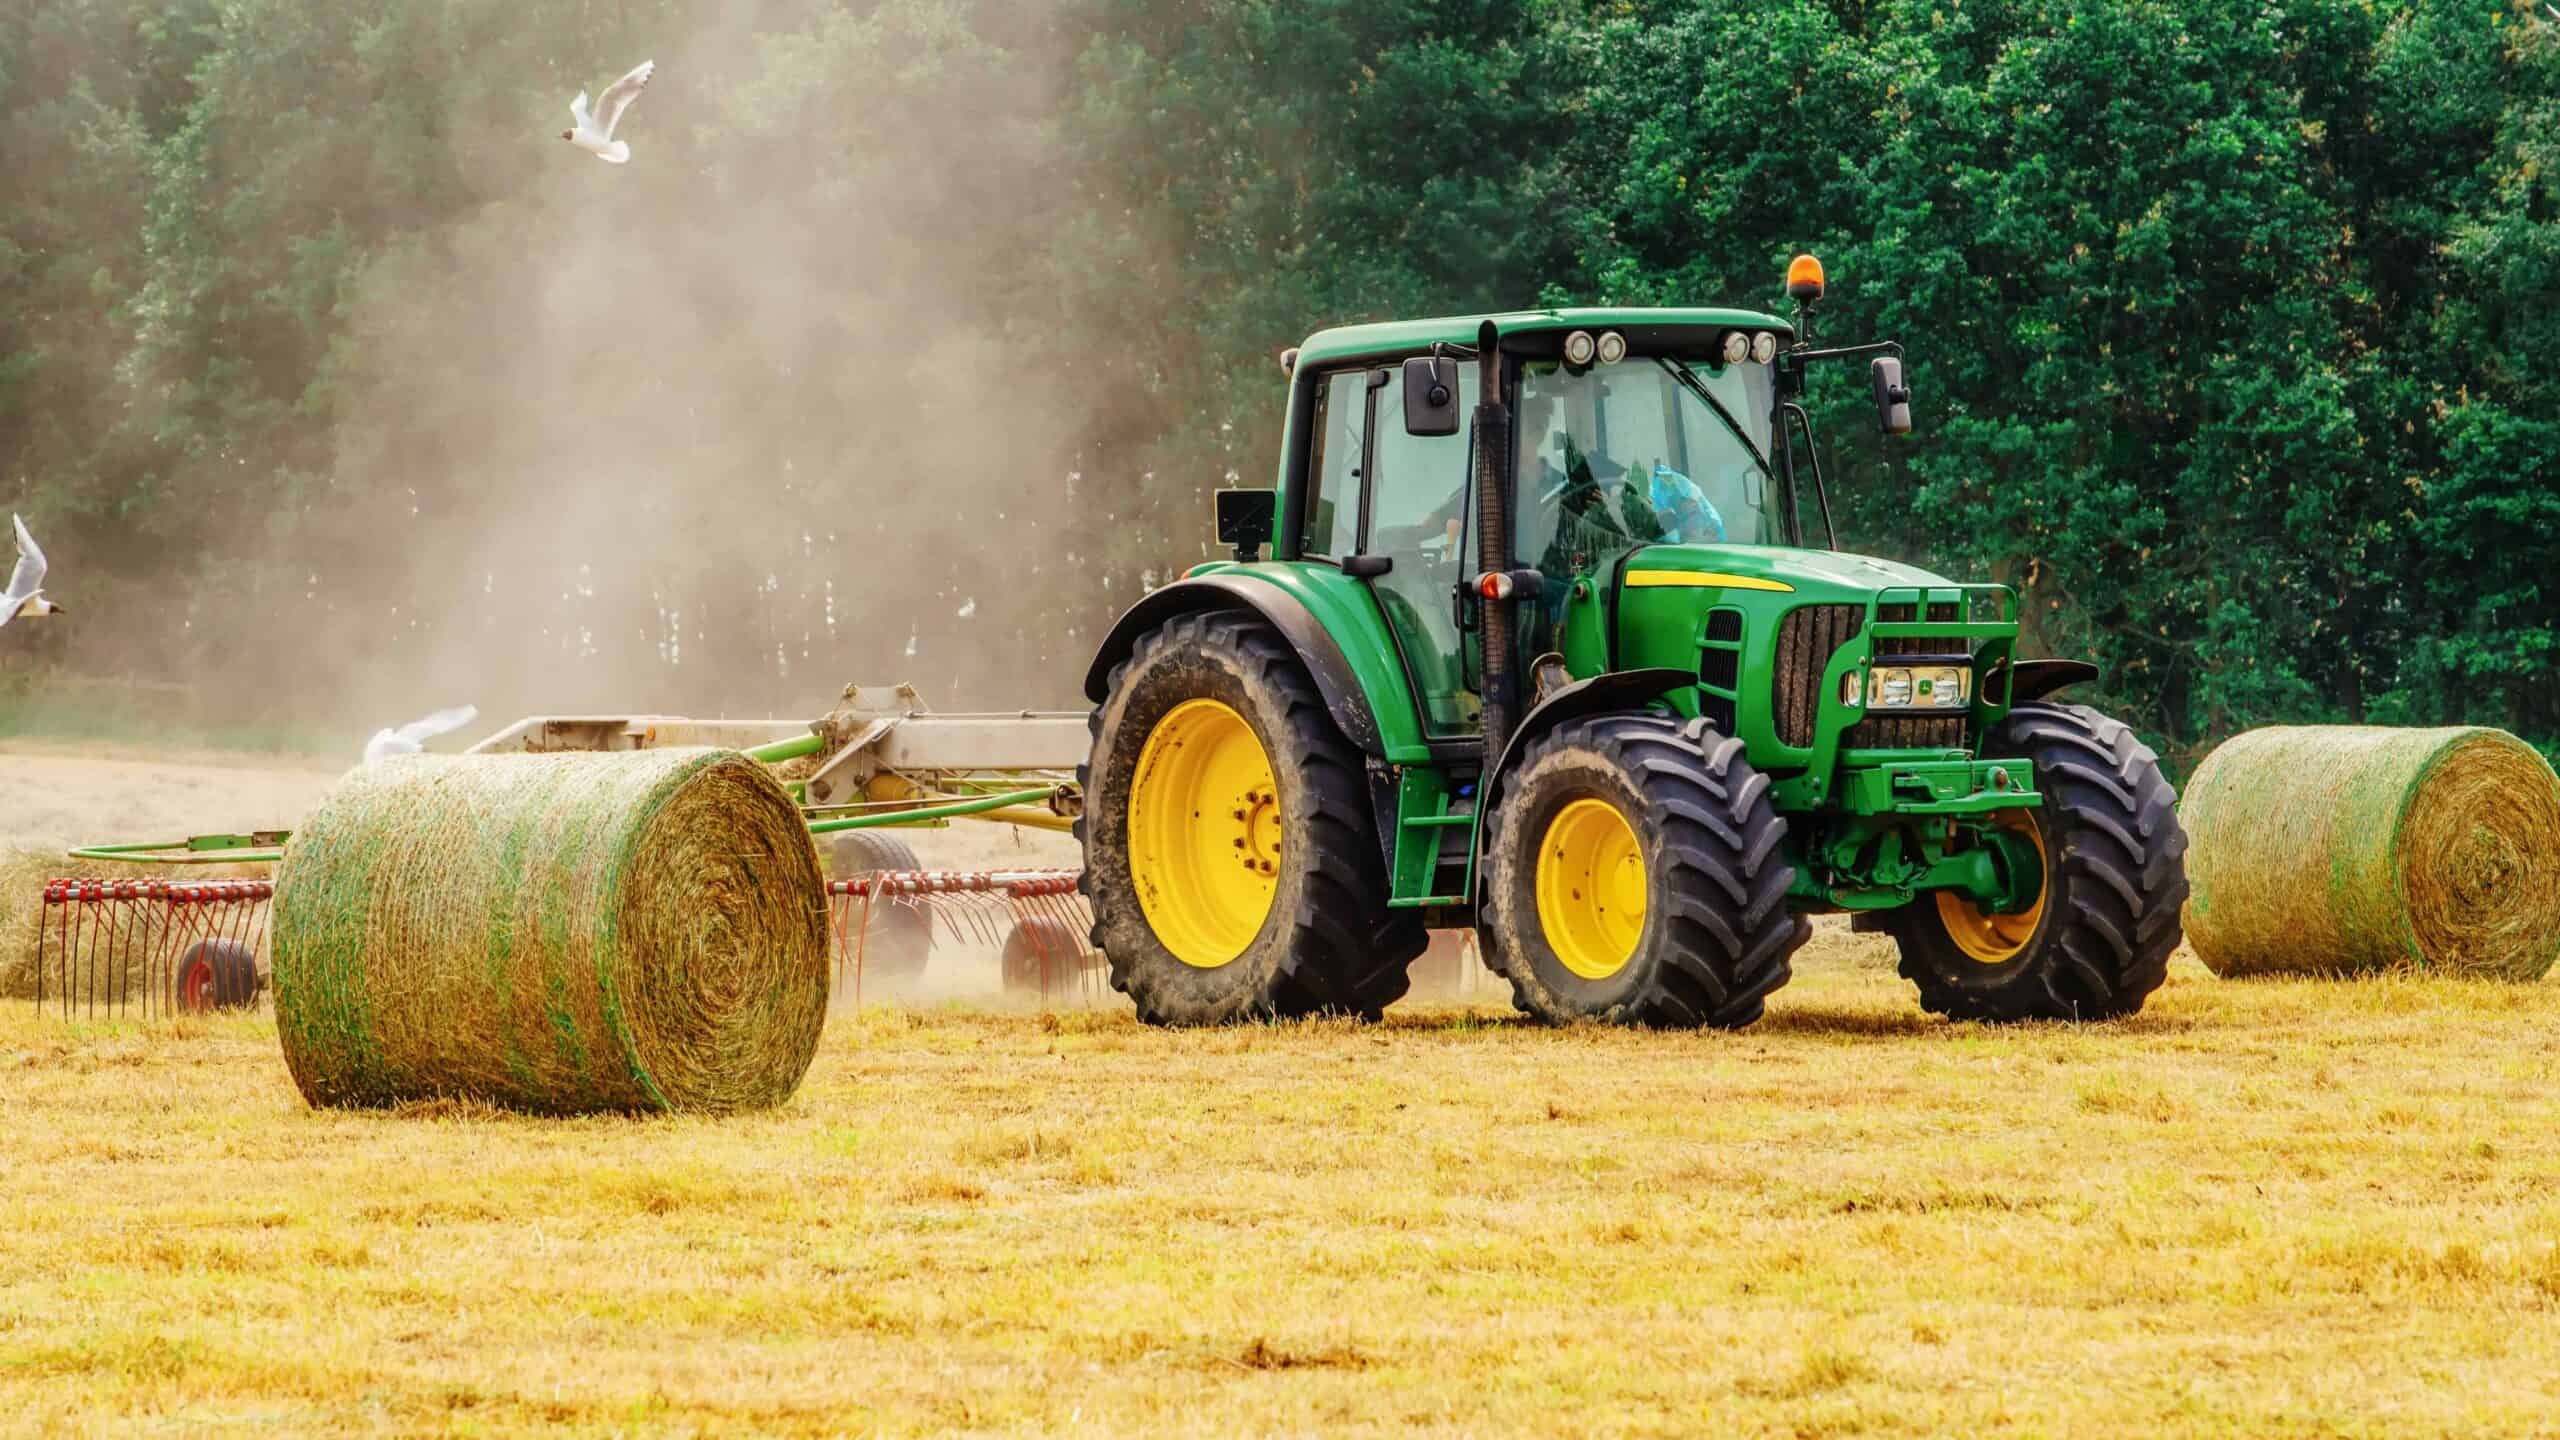 Tractor harvesting hay, ensuring a plentiful harvest